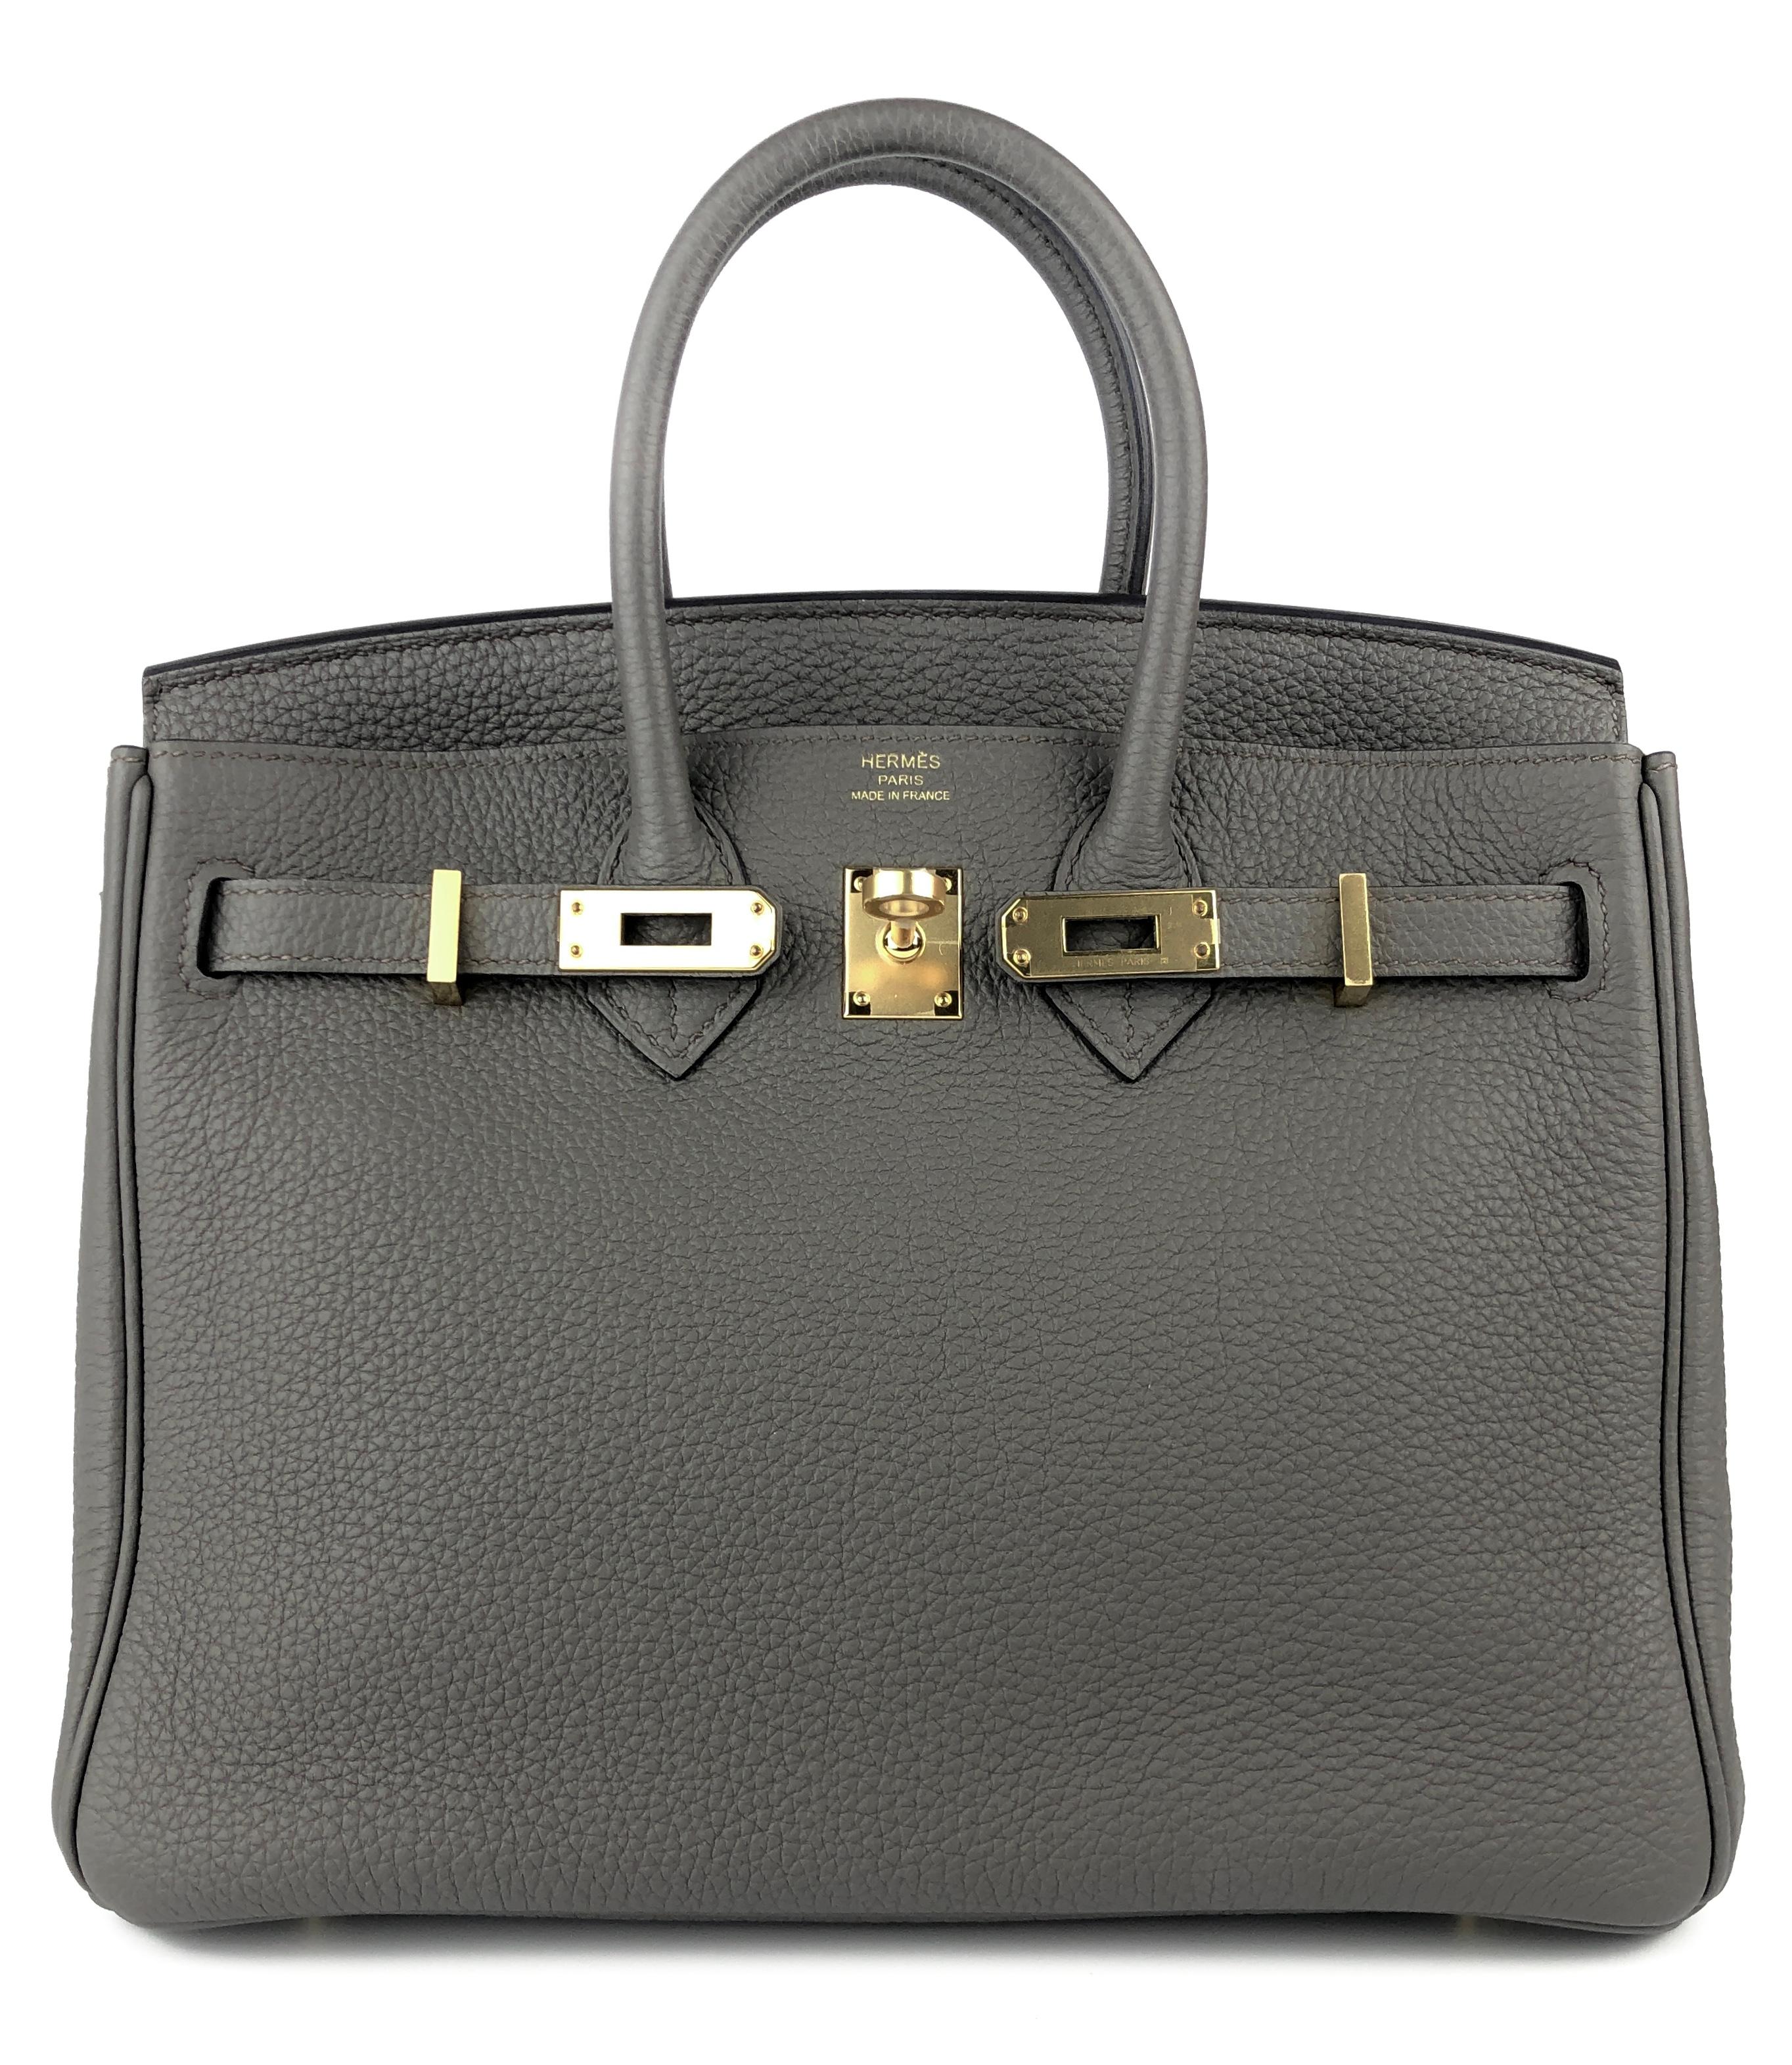 Hermes Birkin 25 Etain Gray Togo Leather Handbag Gold Hardware 2020 In New Condition For Sale In Miami, FL